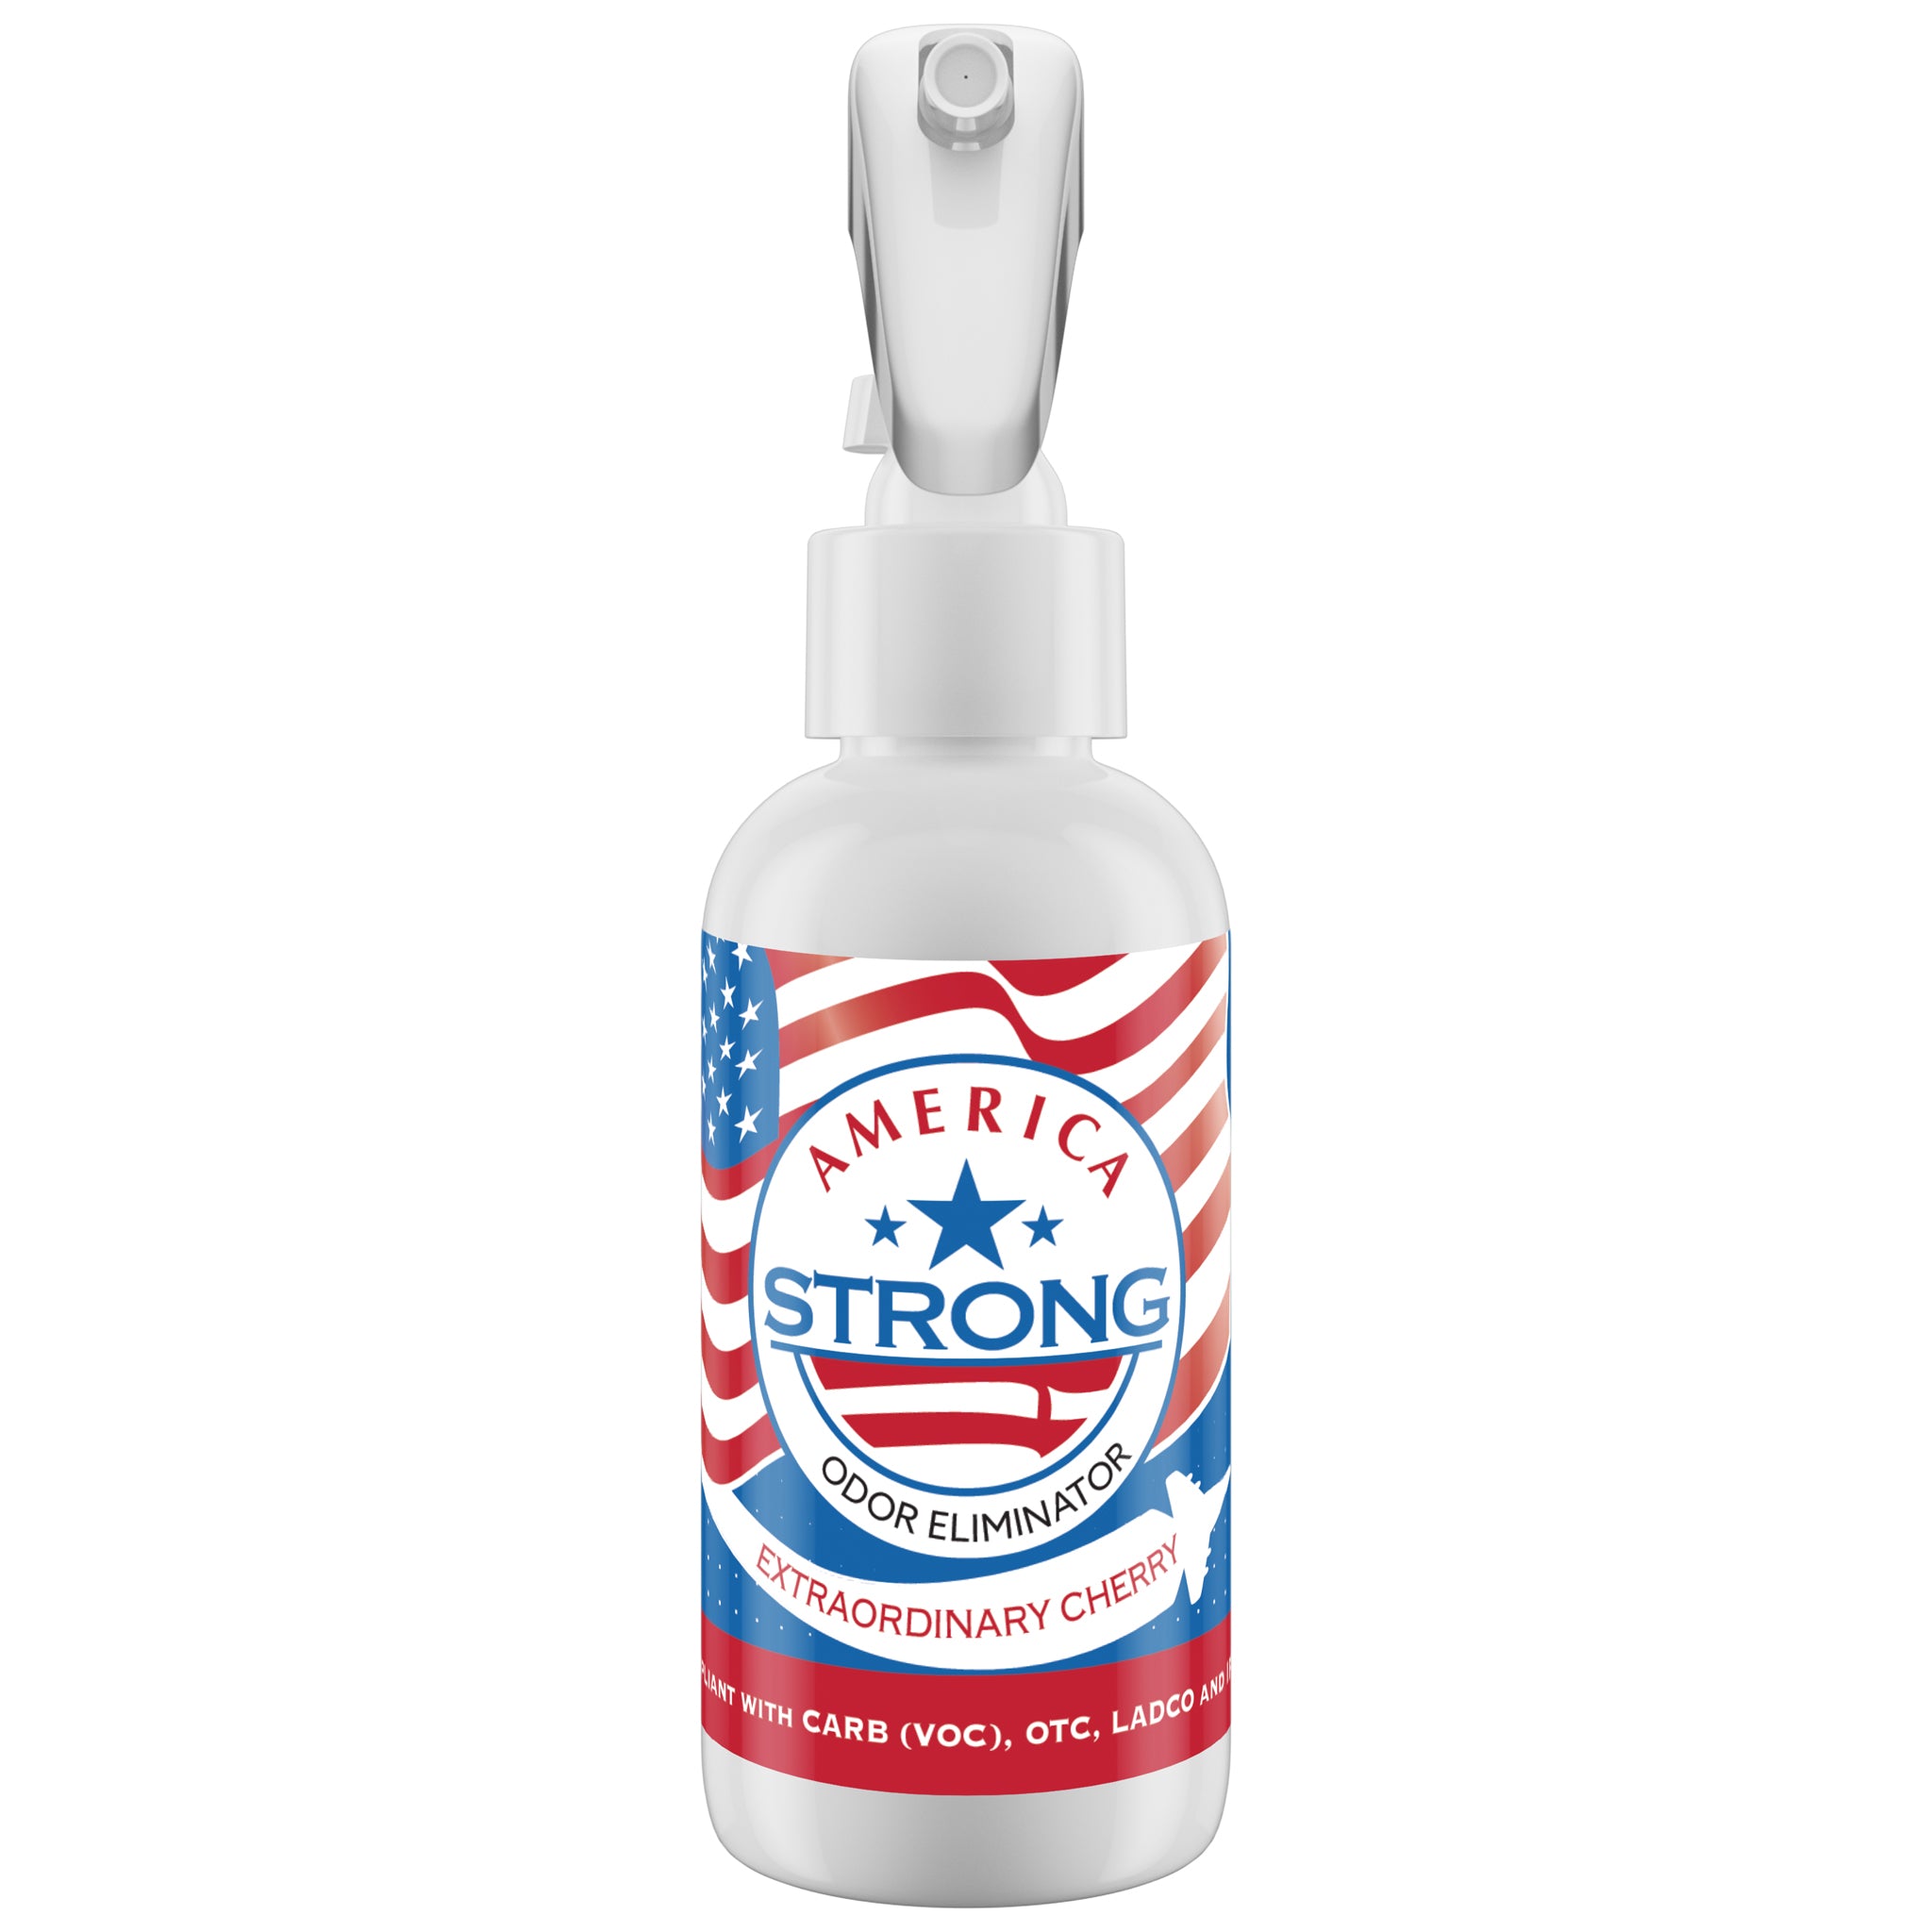 America Strong Odor Eliminator - Extraordinary Cherry Scent Size: 4.0oz